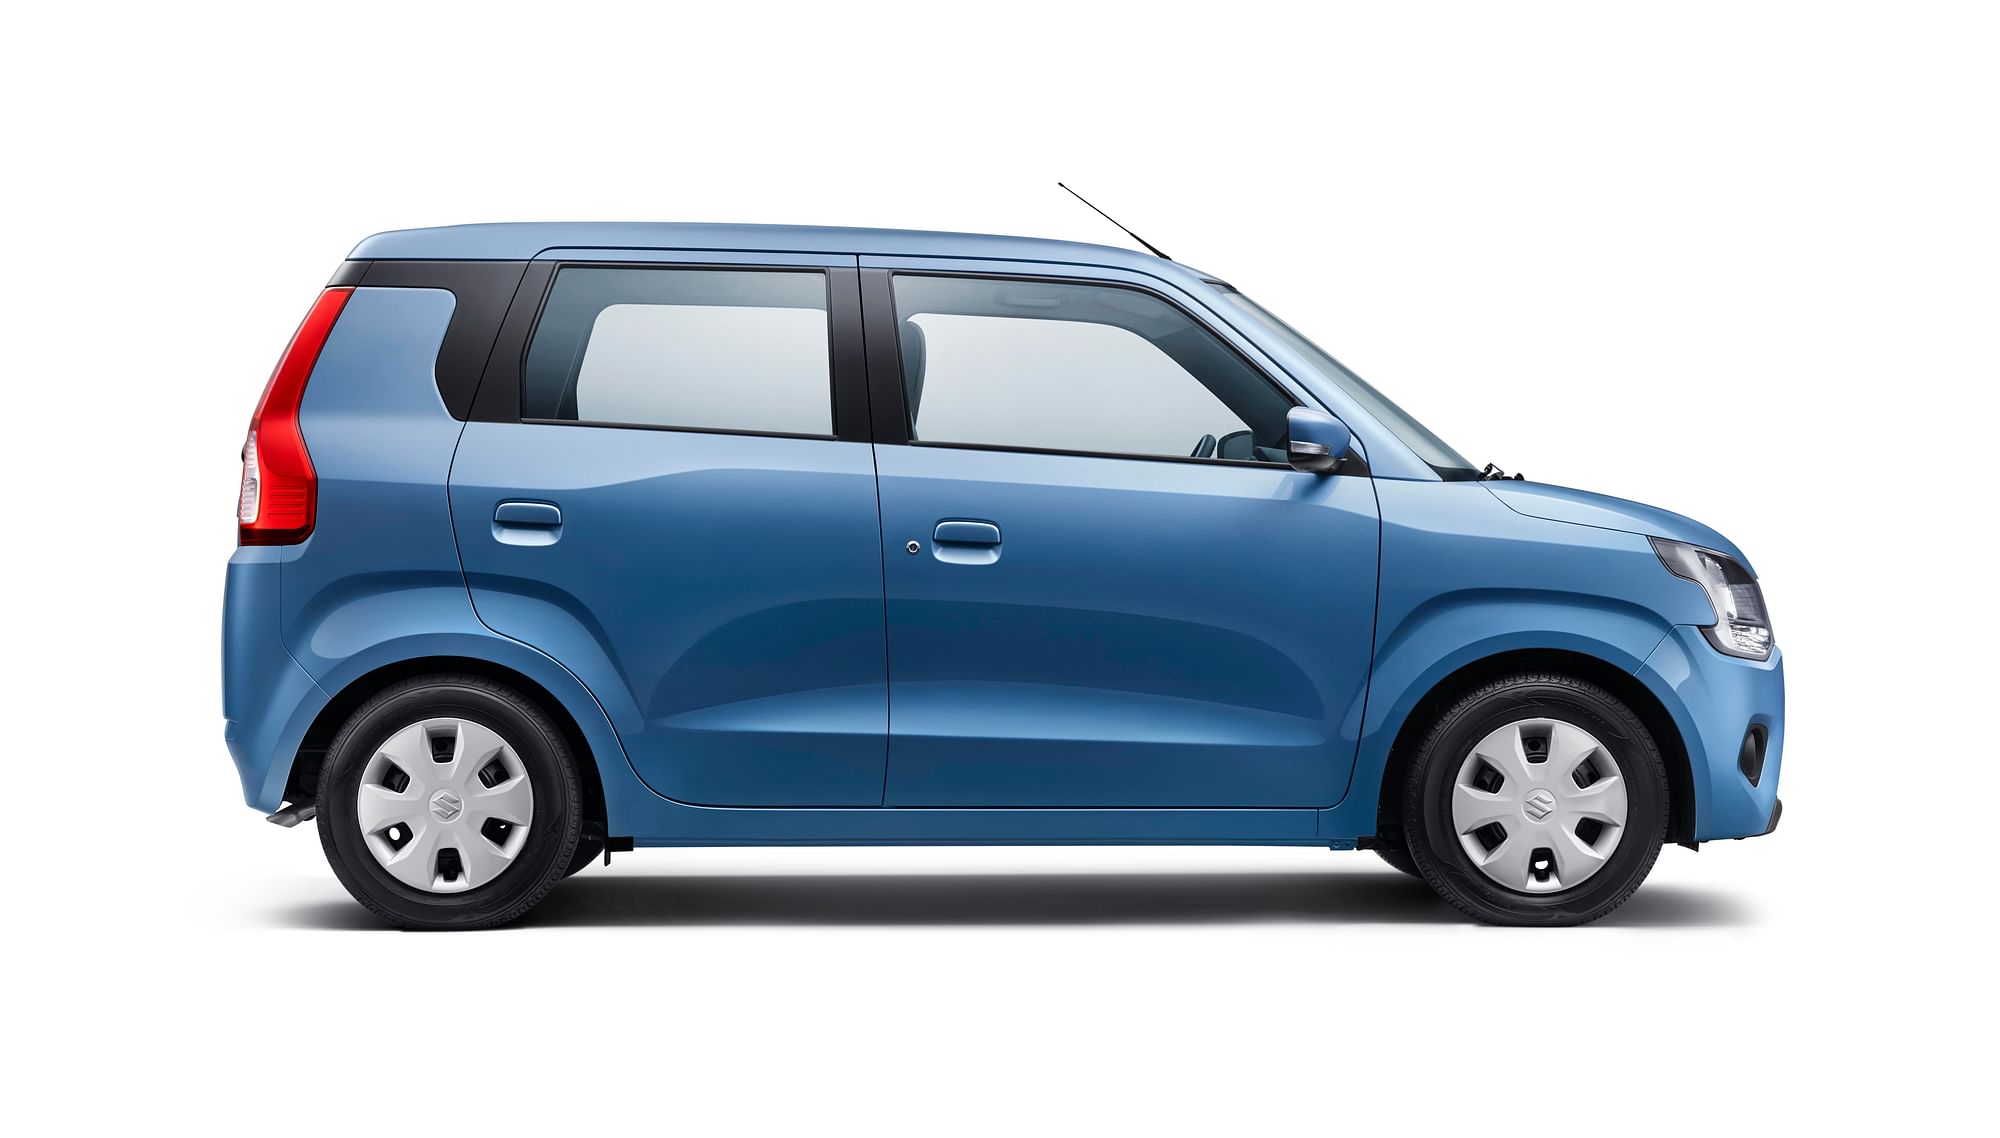 2019 Maruti Suzuki Wagon-R Launched With Two Engine Options